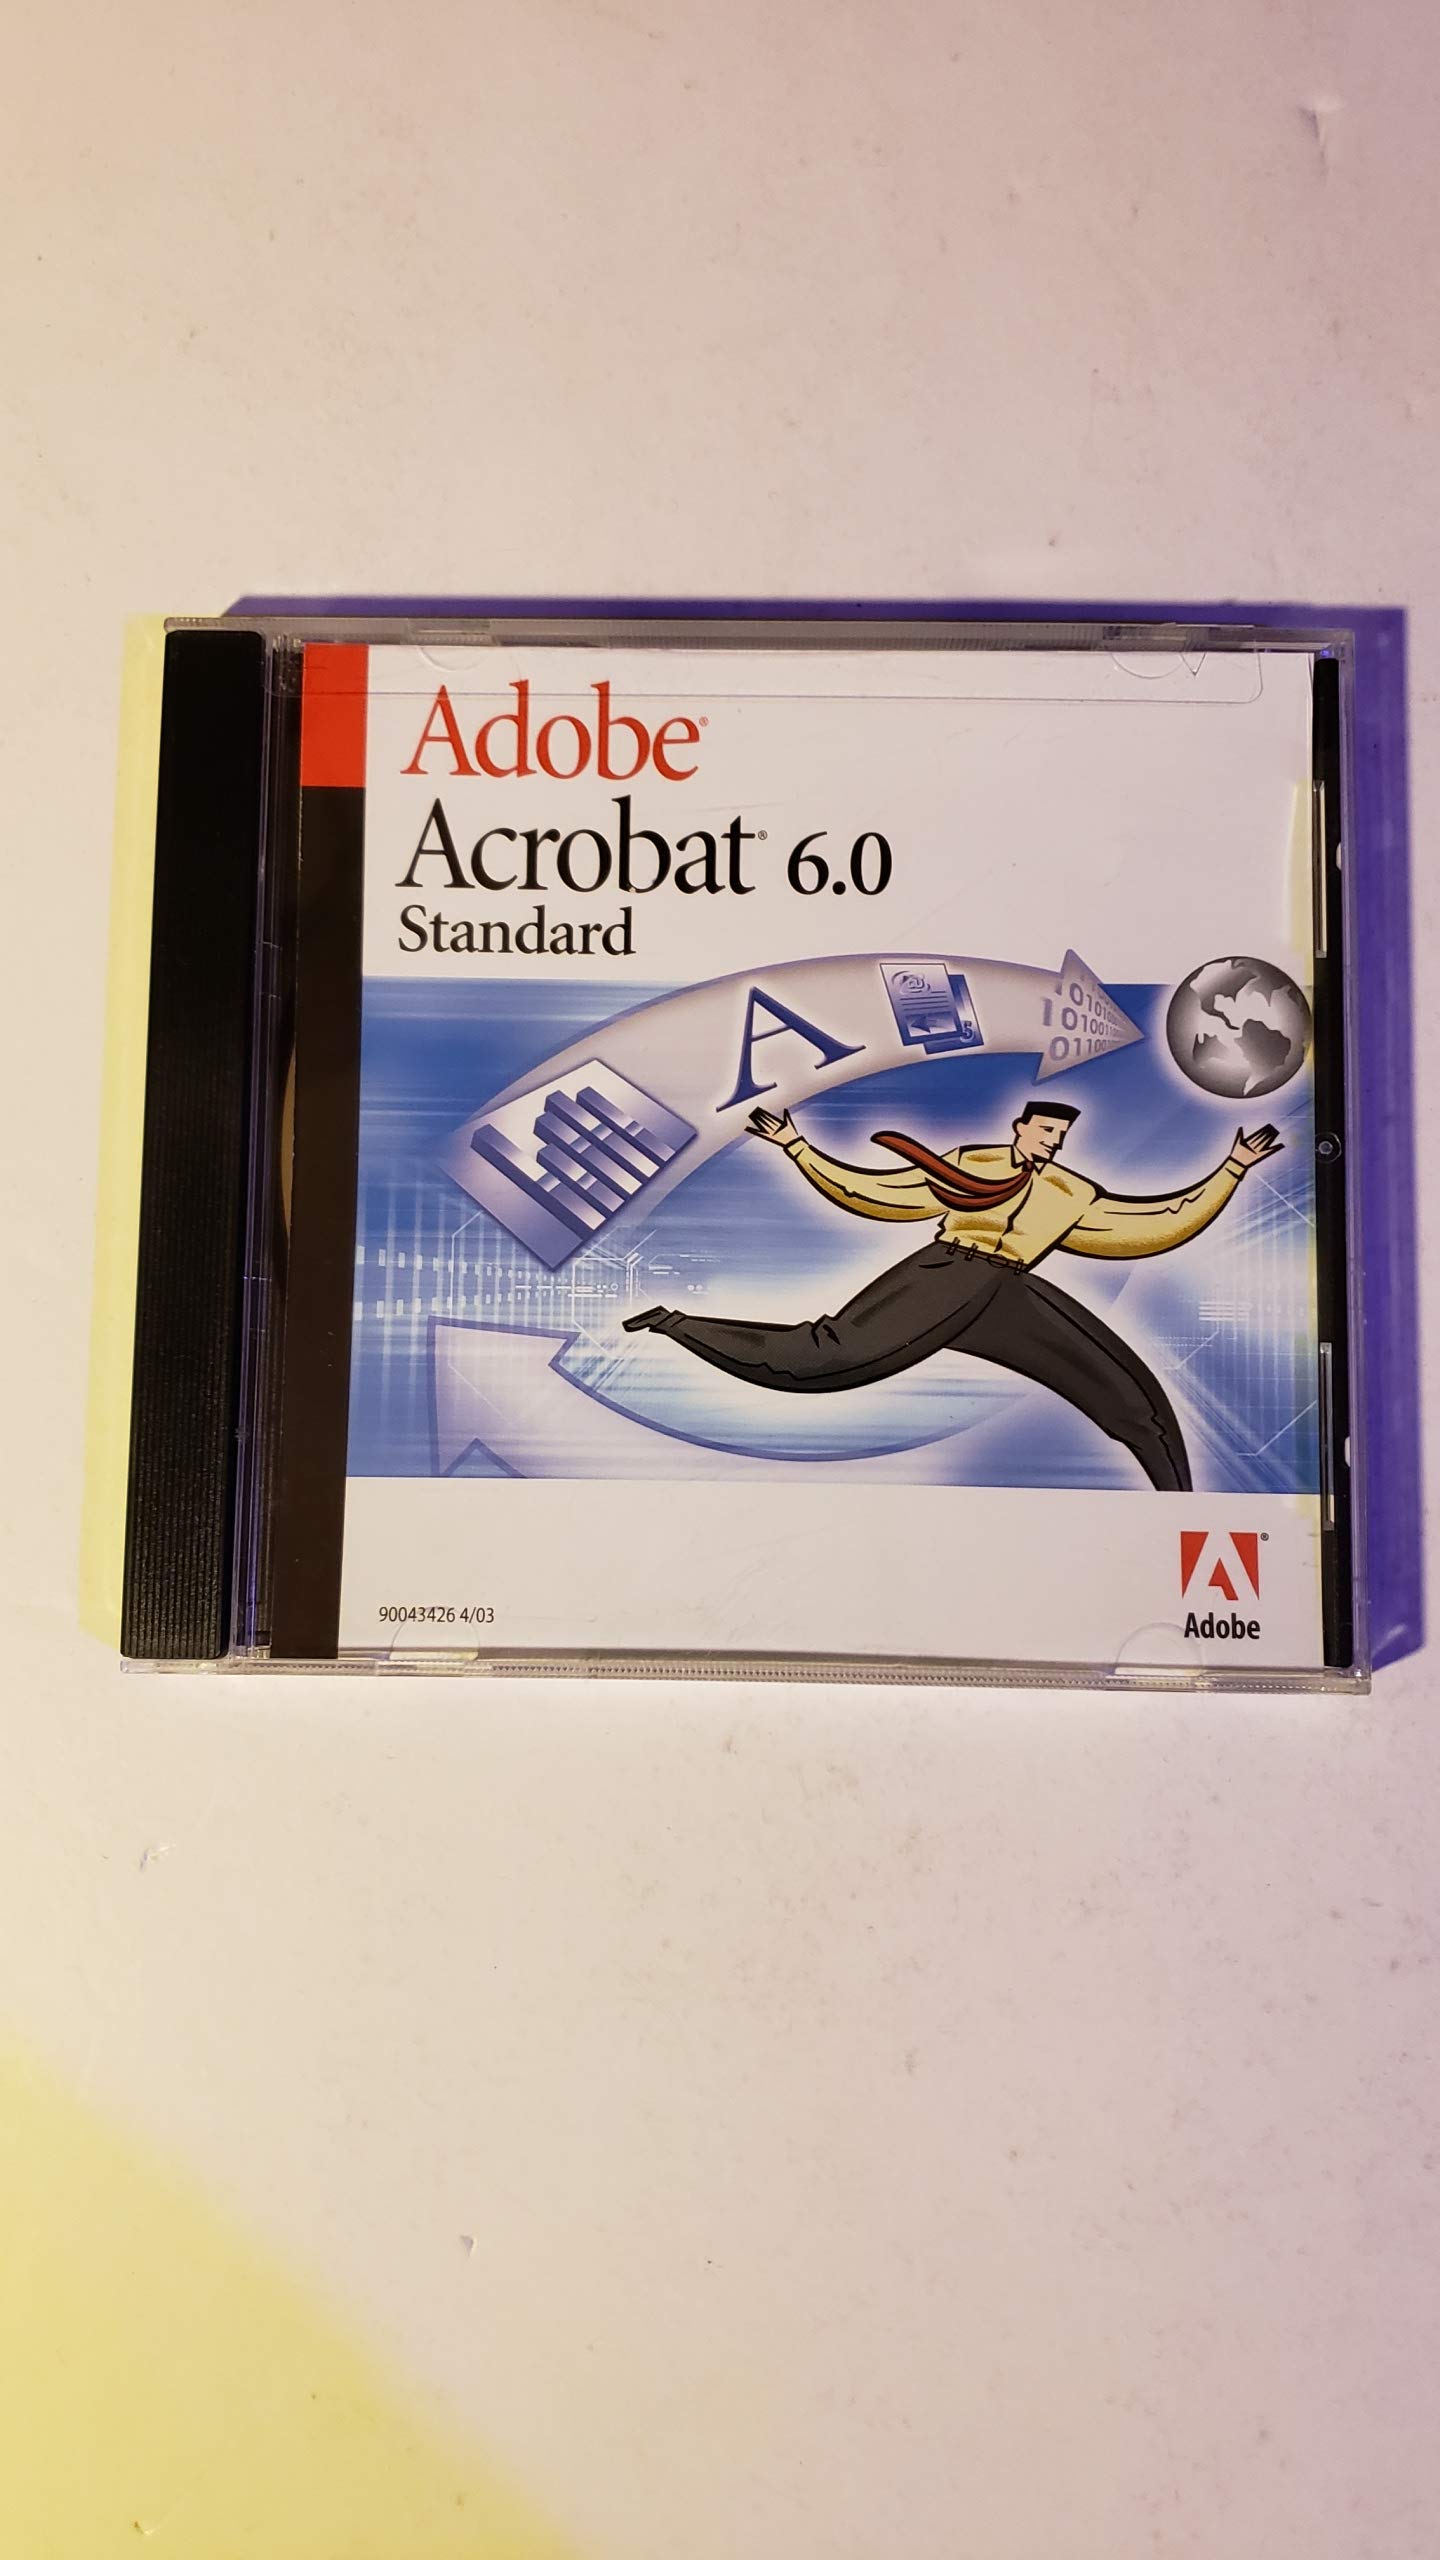 adobe acrobat 6.0 standard free download for windows 7